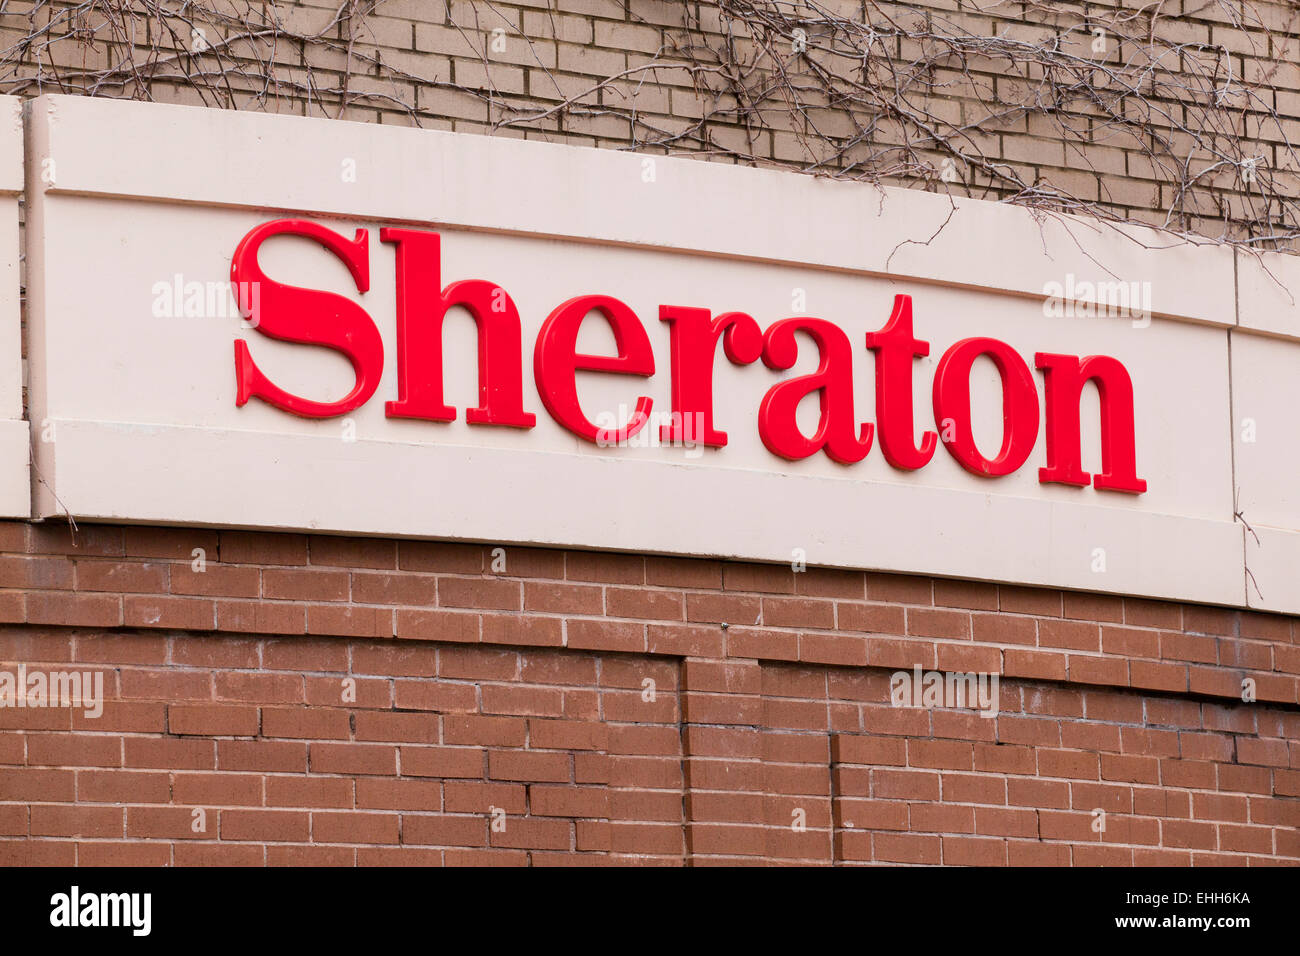 Sheraton hotel sign - USA Stock Photo